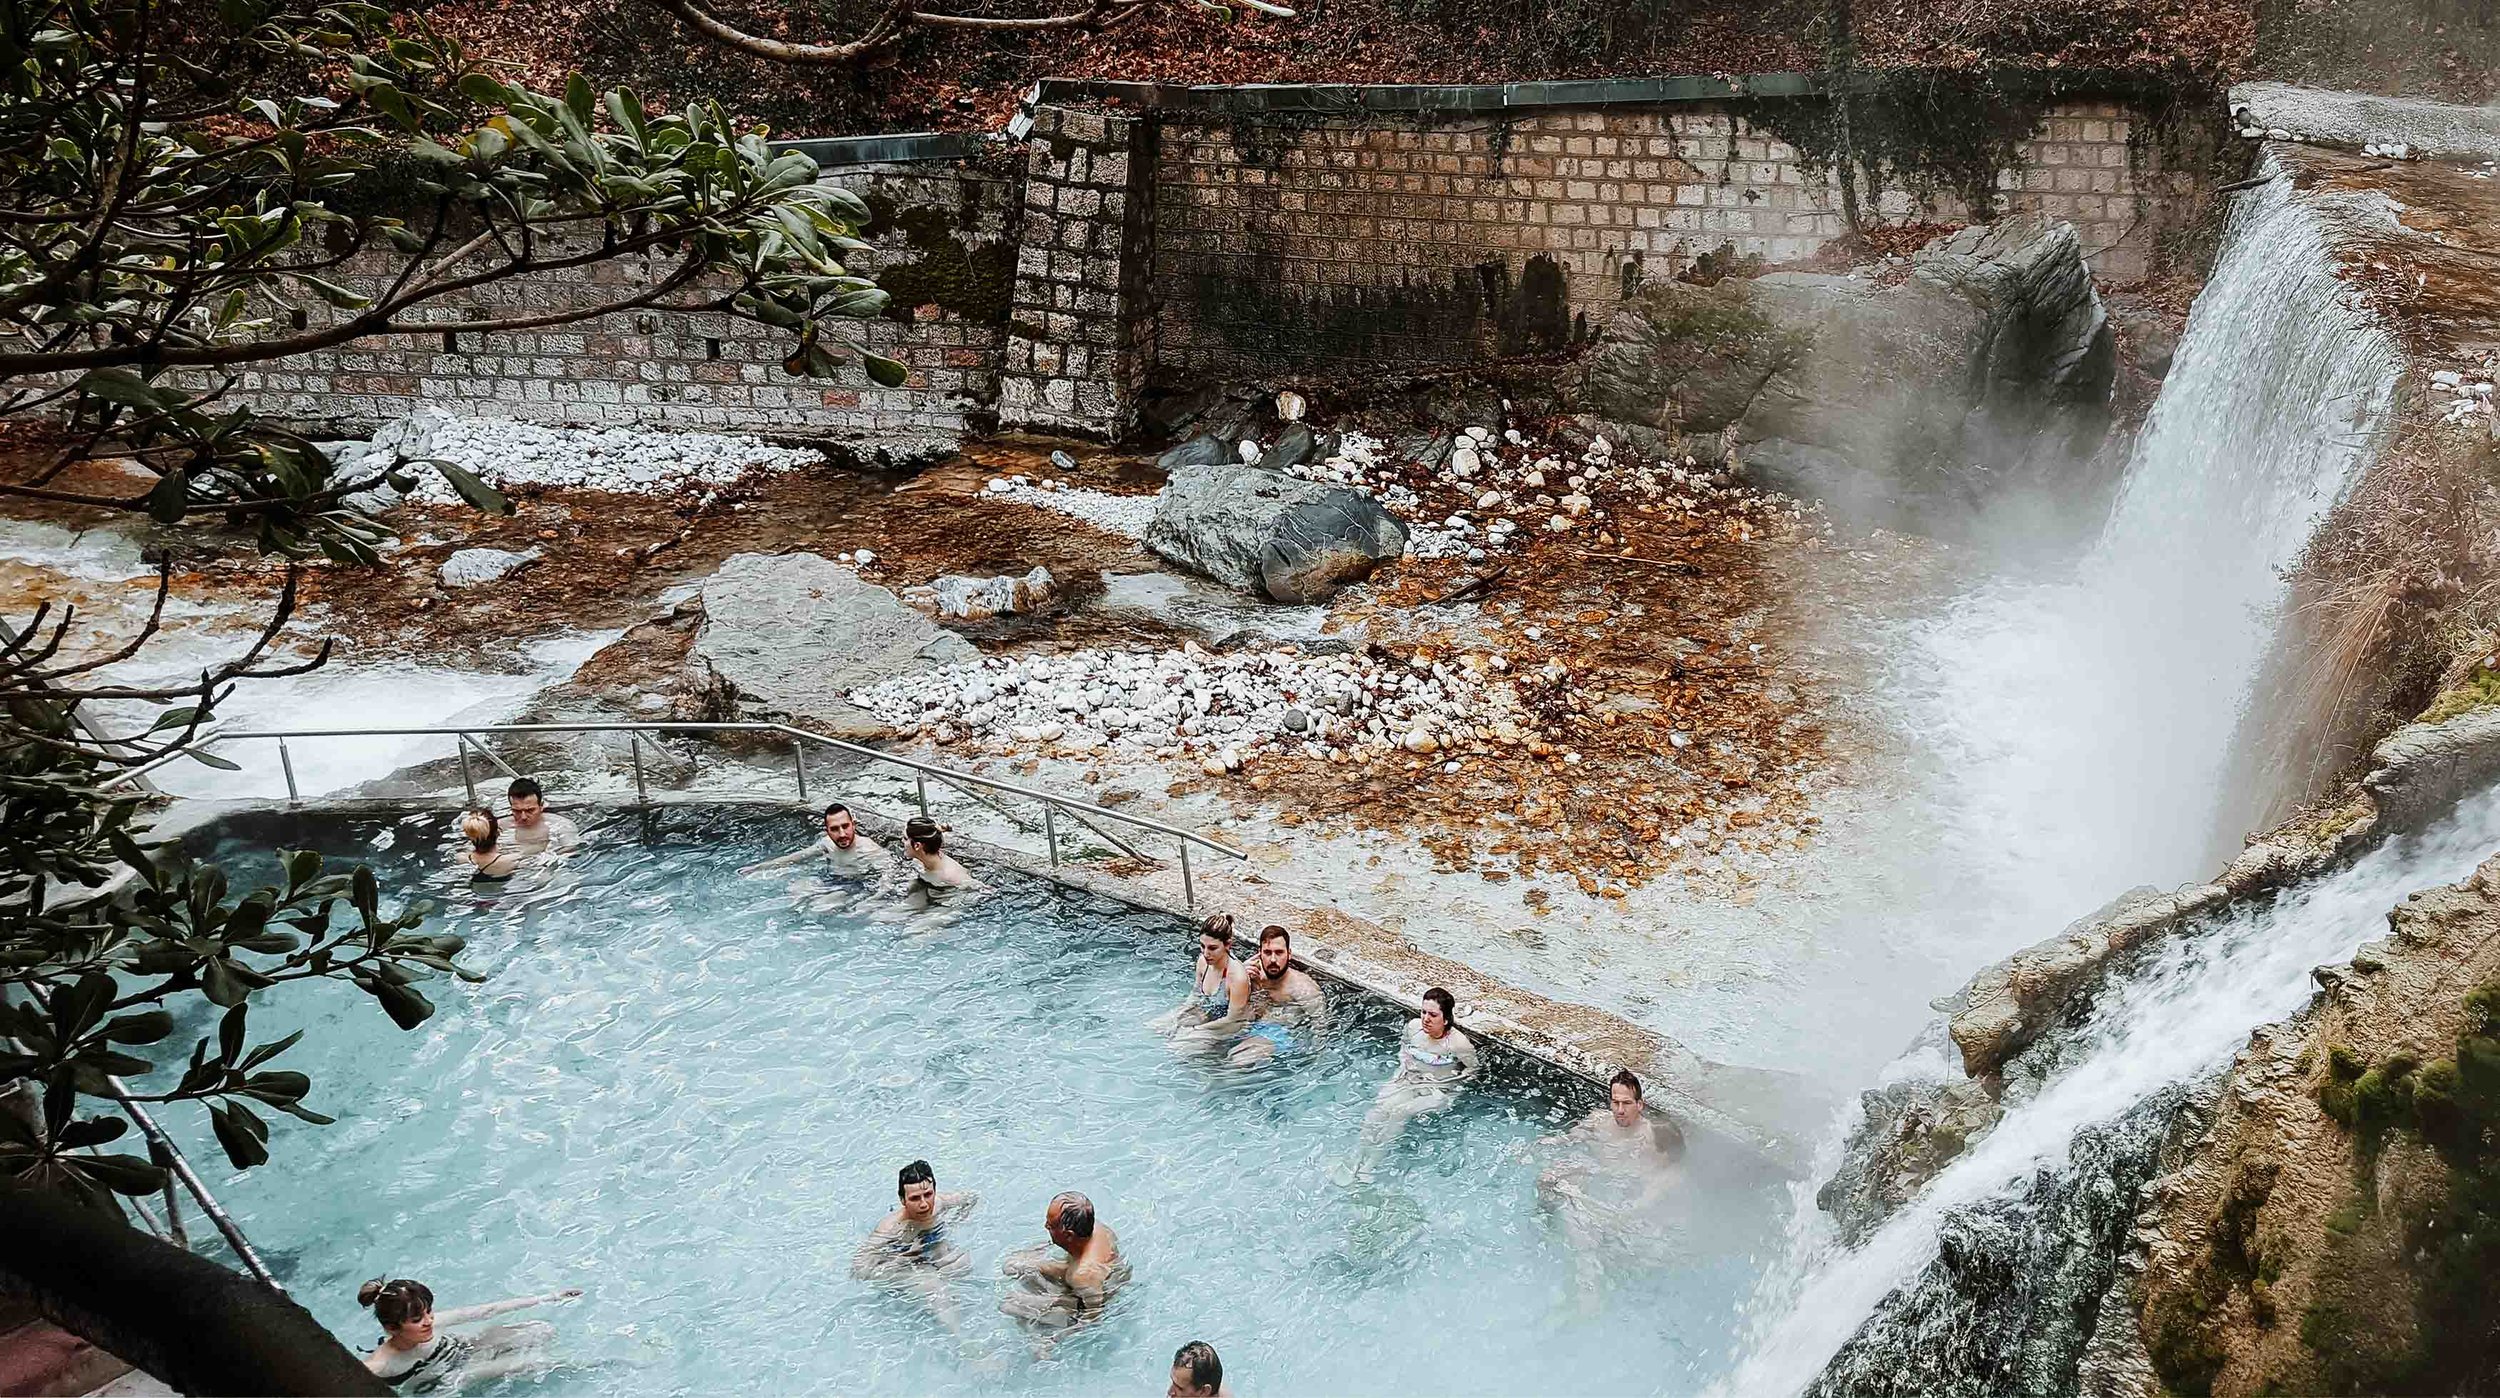 People in pozar thermal pools in thessaloniki in 3 days in thessaloniki